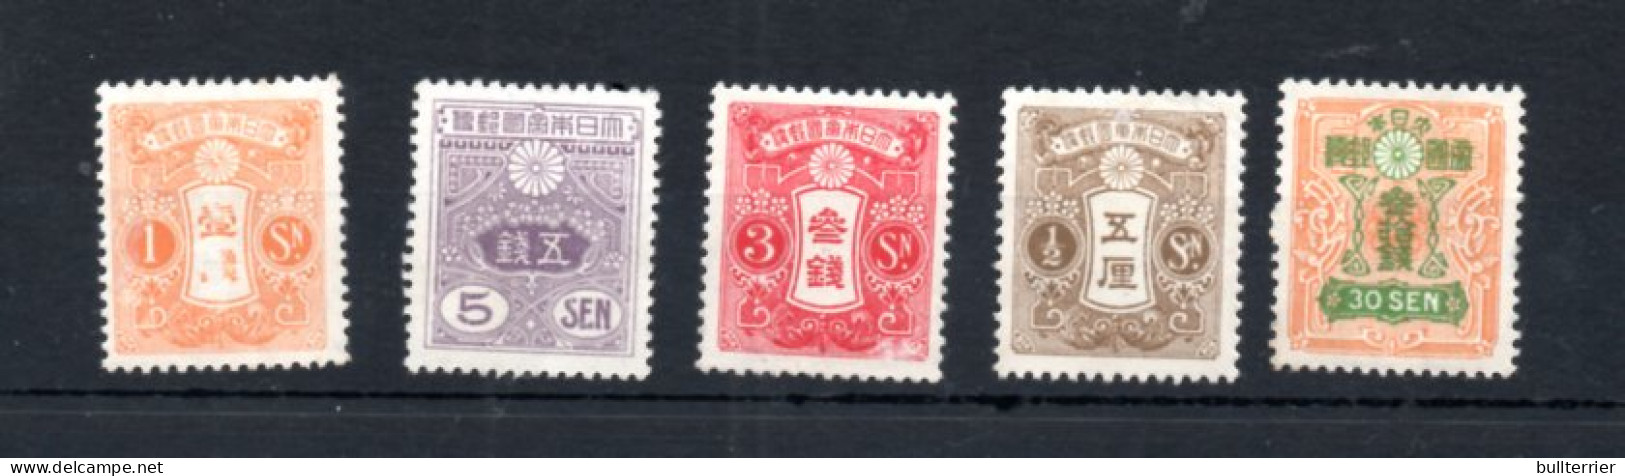 JAPAN - 1914 - 1//2, 1,3, 5 AND 30SEN VALUES  MINT NEVER HINGED SOME GUM SPECKS  SG CAT £65,  - Ungebraucht